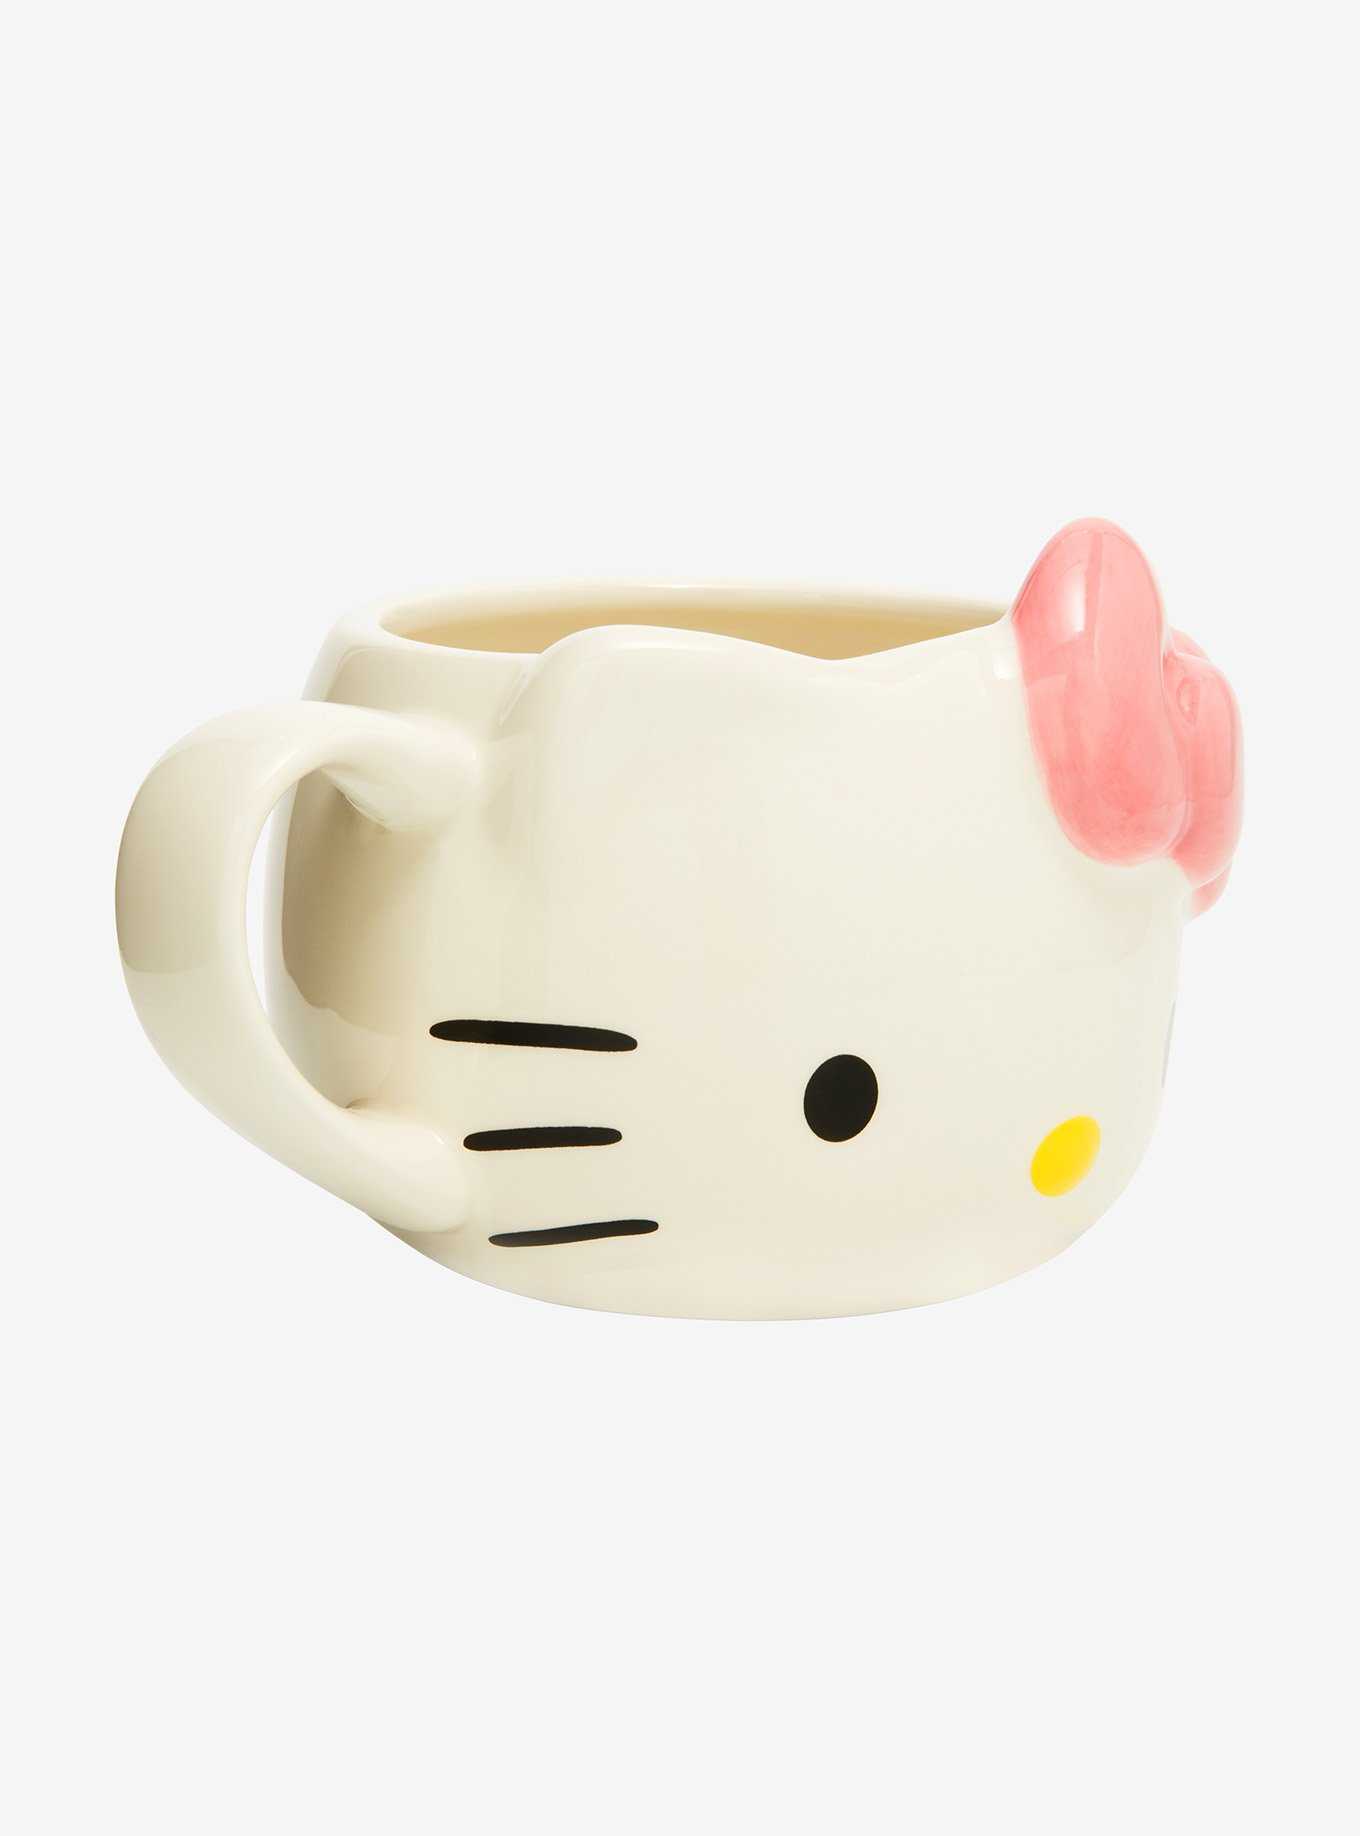 Sanrio Hello Kitty Head Pink Bow Figural Mug, , hi-res